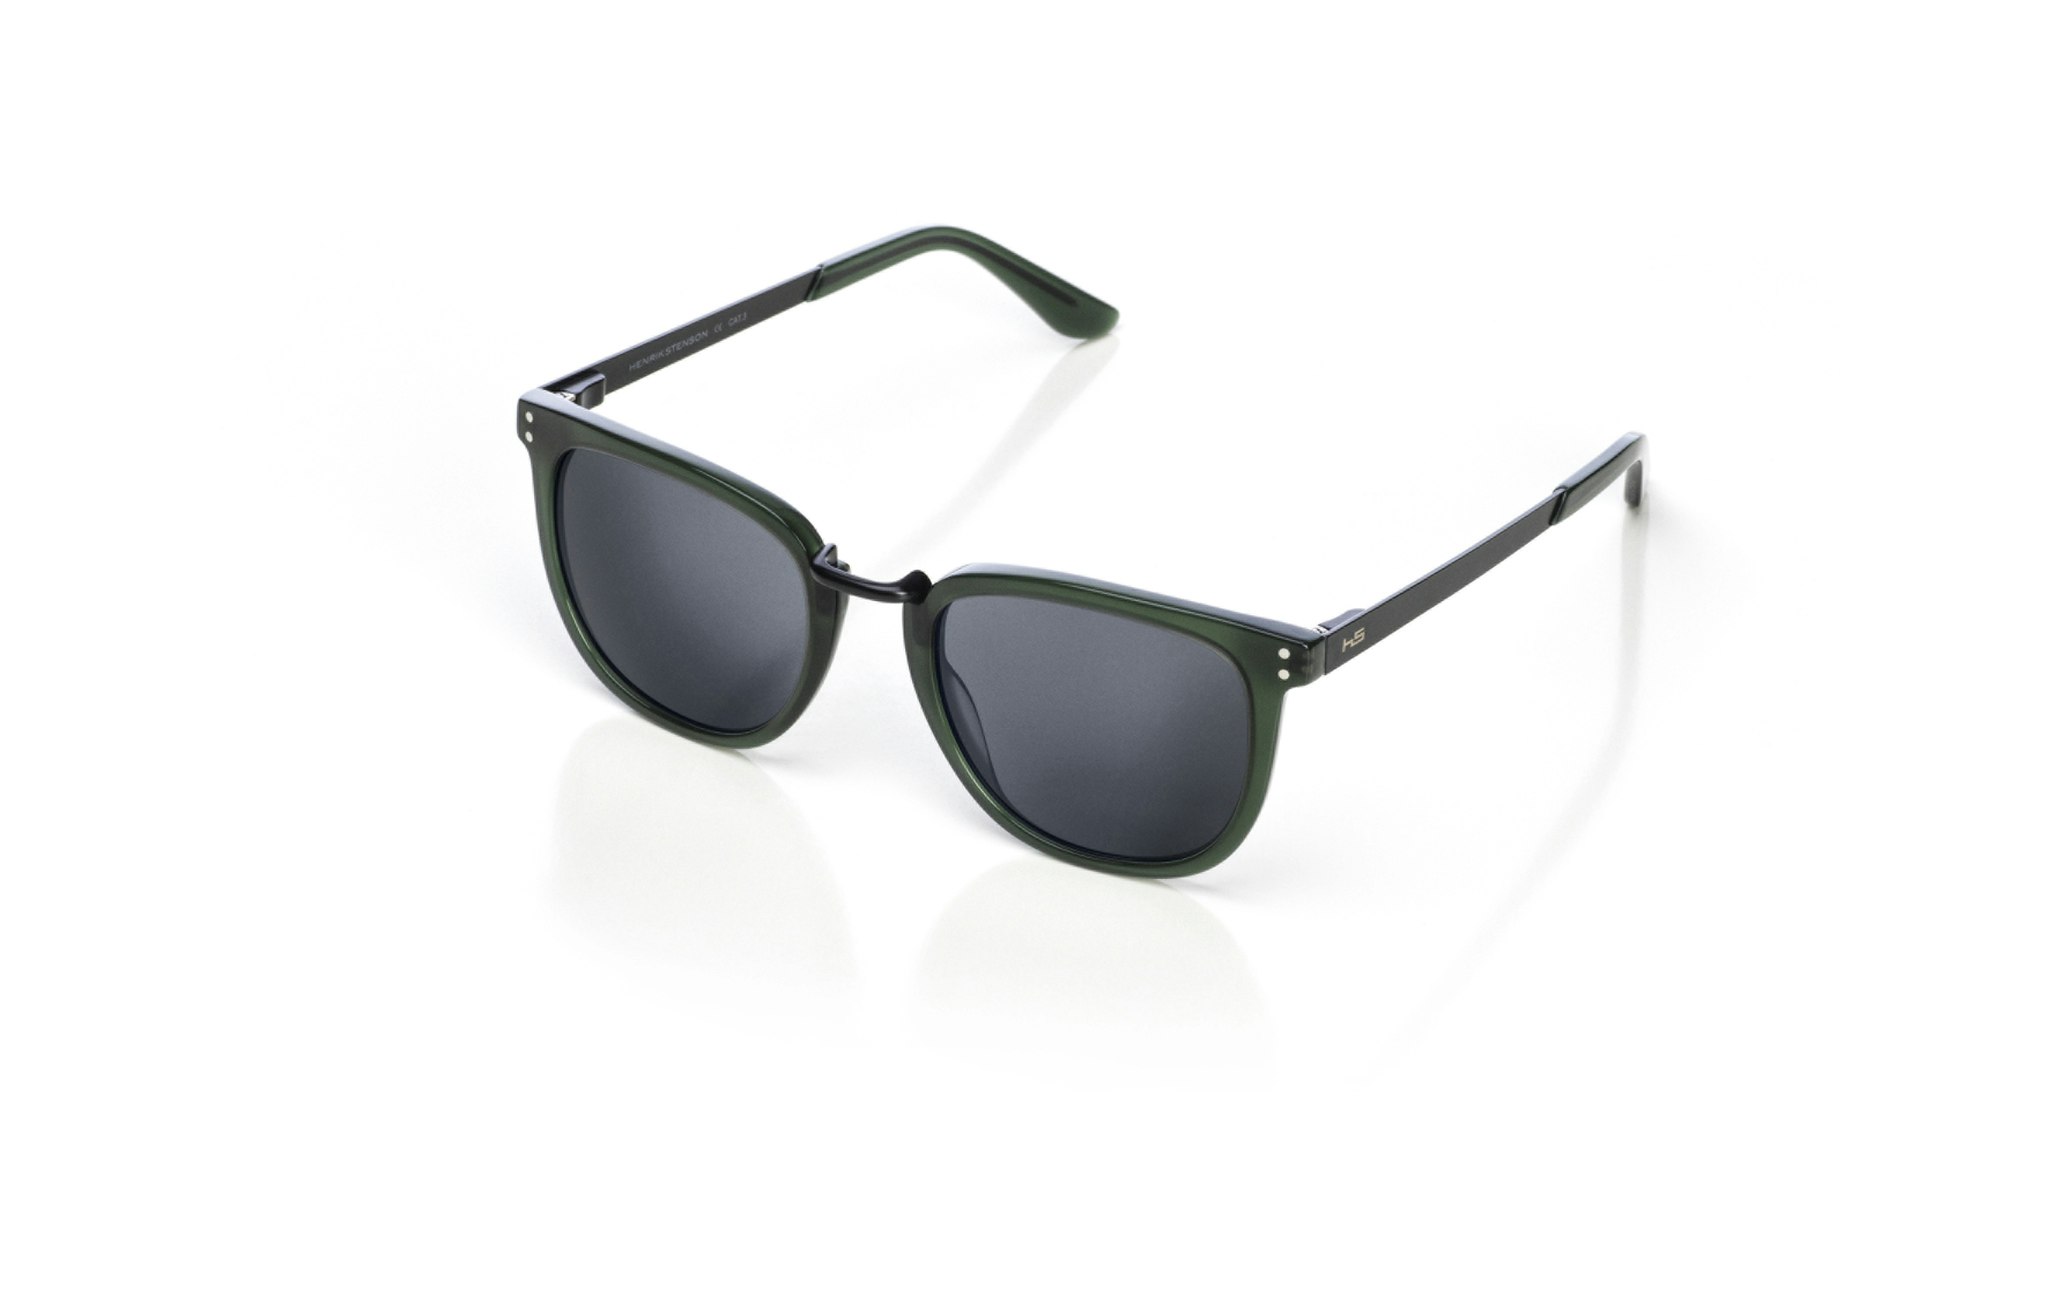 Henrik Stenson Eyewear Scandinavian 3.0 solglasögon Shiny Milk Green